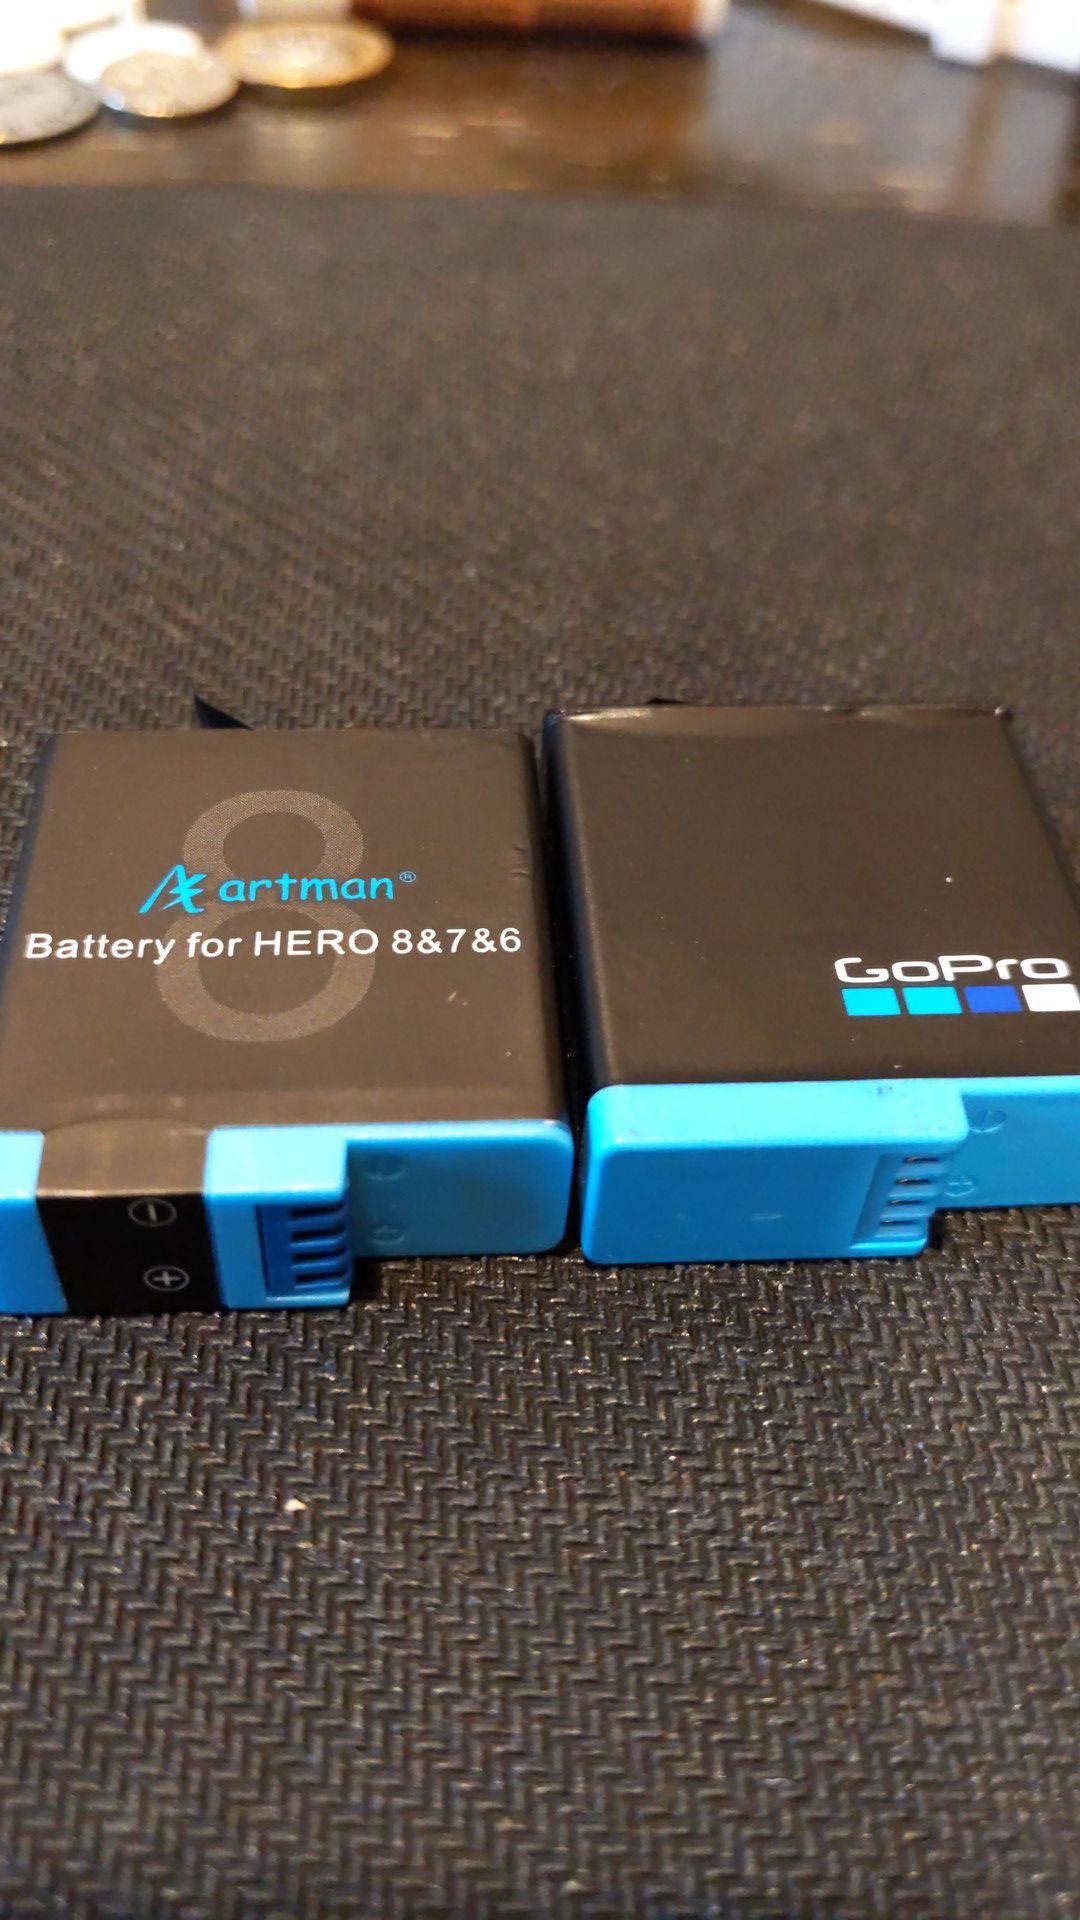 GoPro batteries